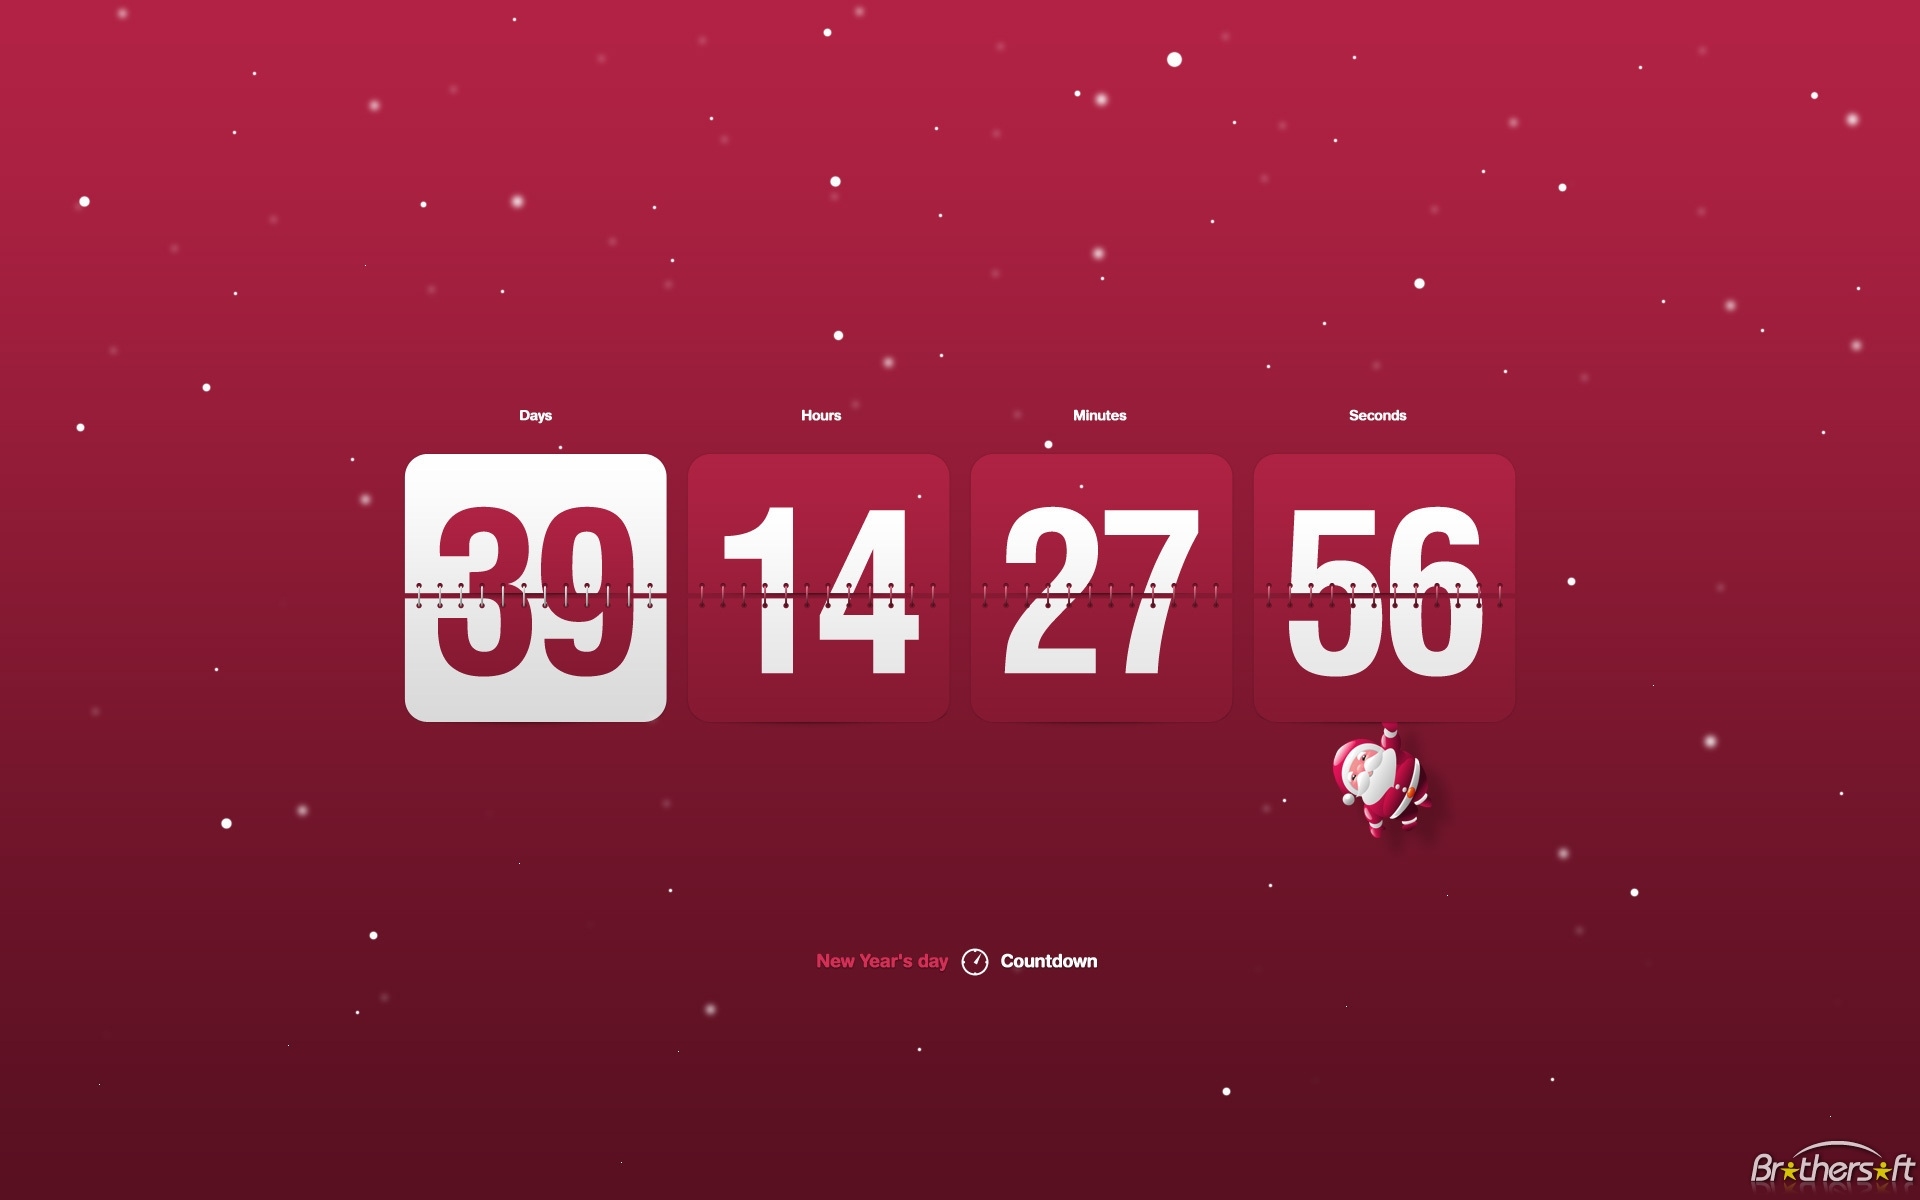 49+] Desktop Wallpaper Countdown Timer On Wallpapersafari Countdown Calendar Widget For Desktop